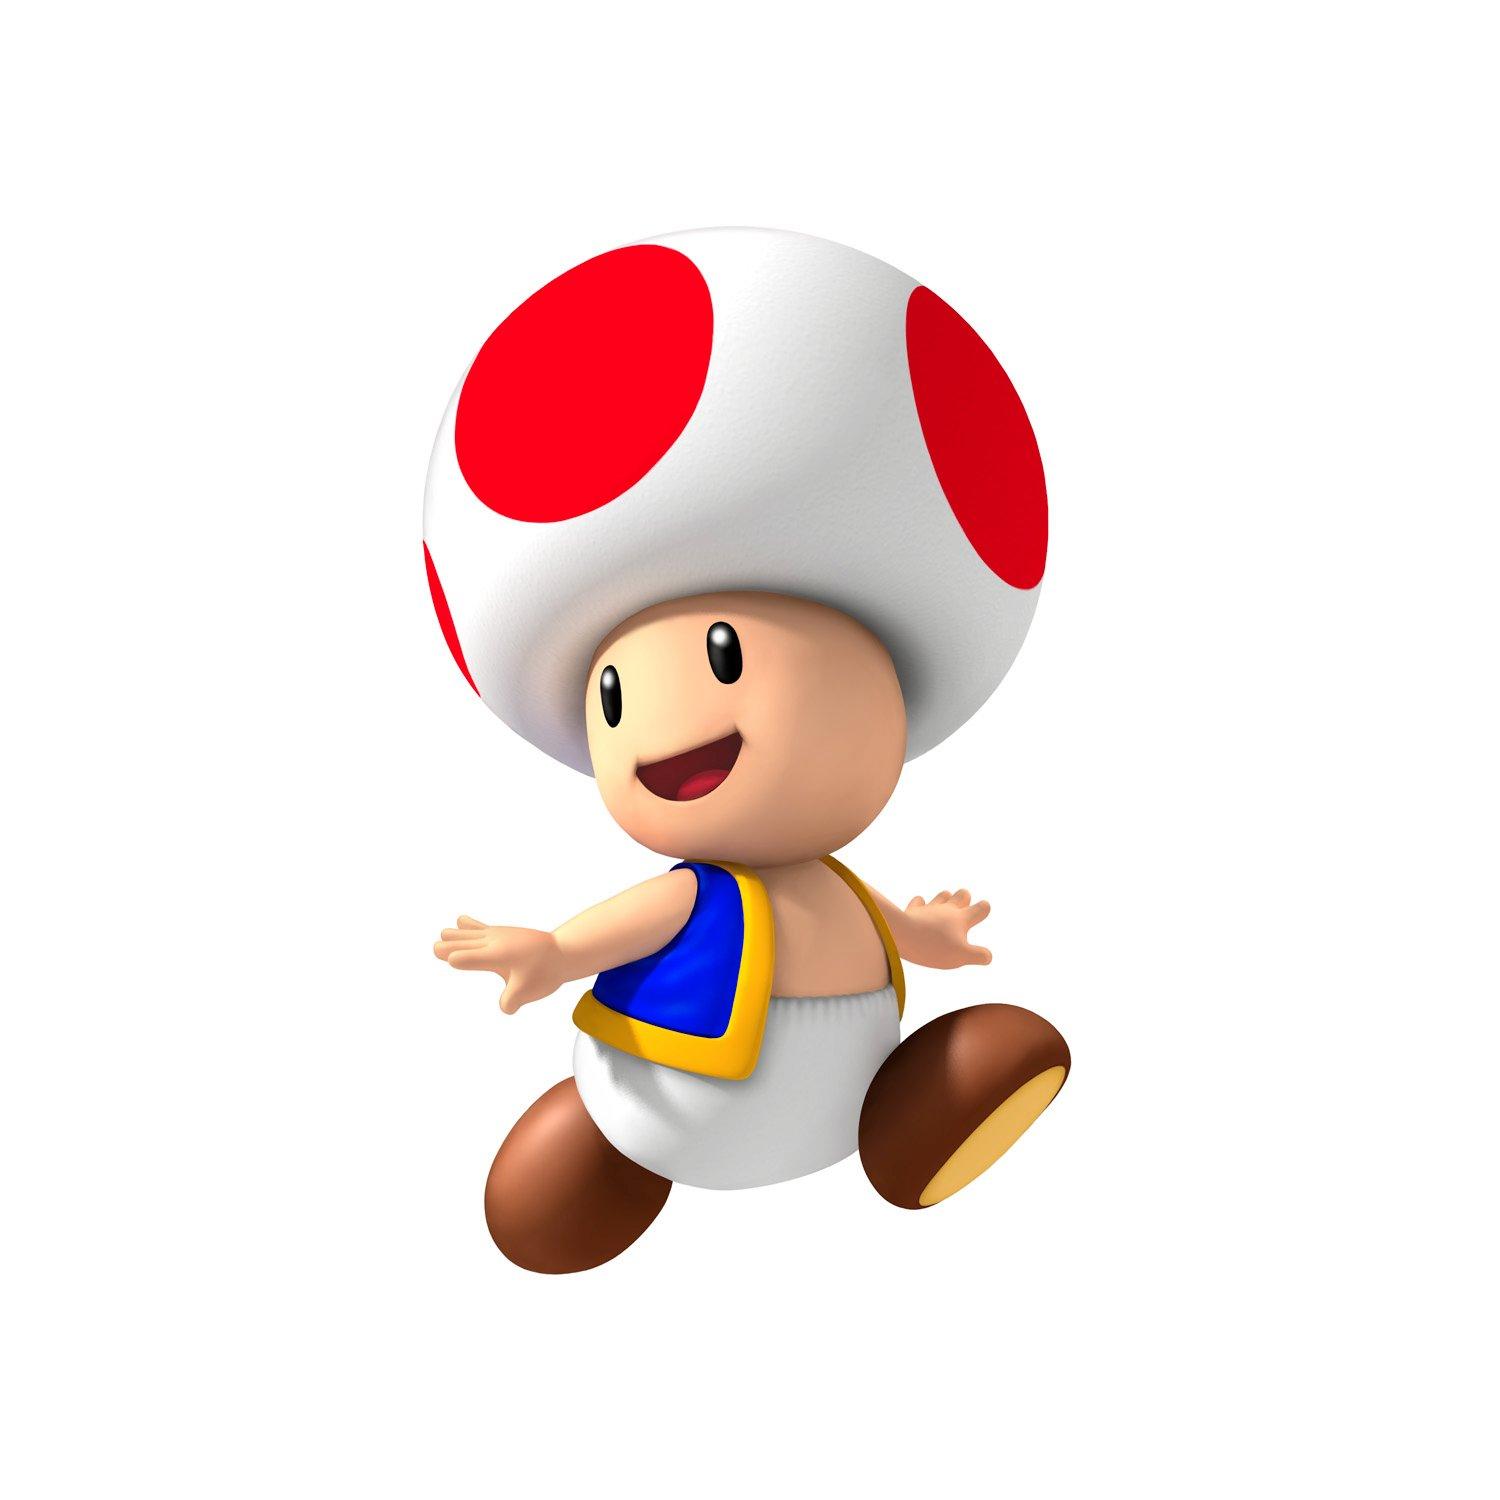 Nintendo Wii Spiele Auswahl Mario Kart , Mario Party 8 ,9 ,Sports , Wii  Party